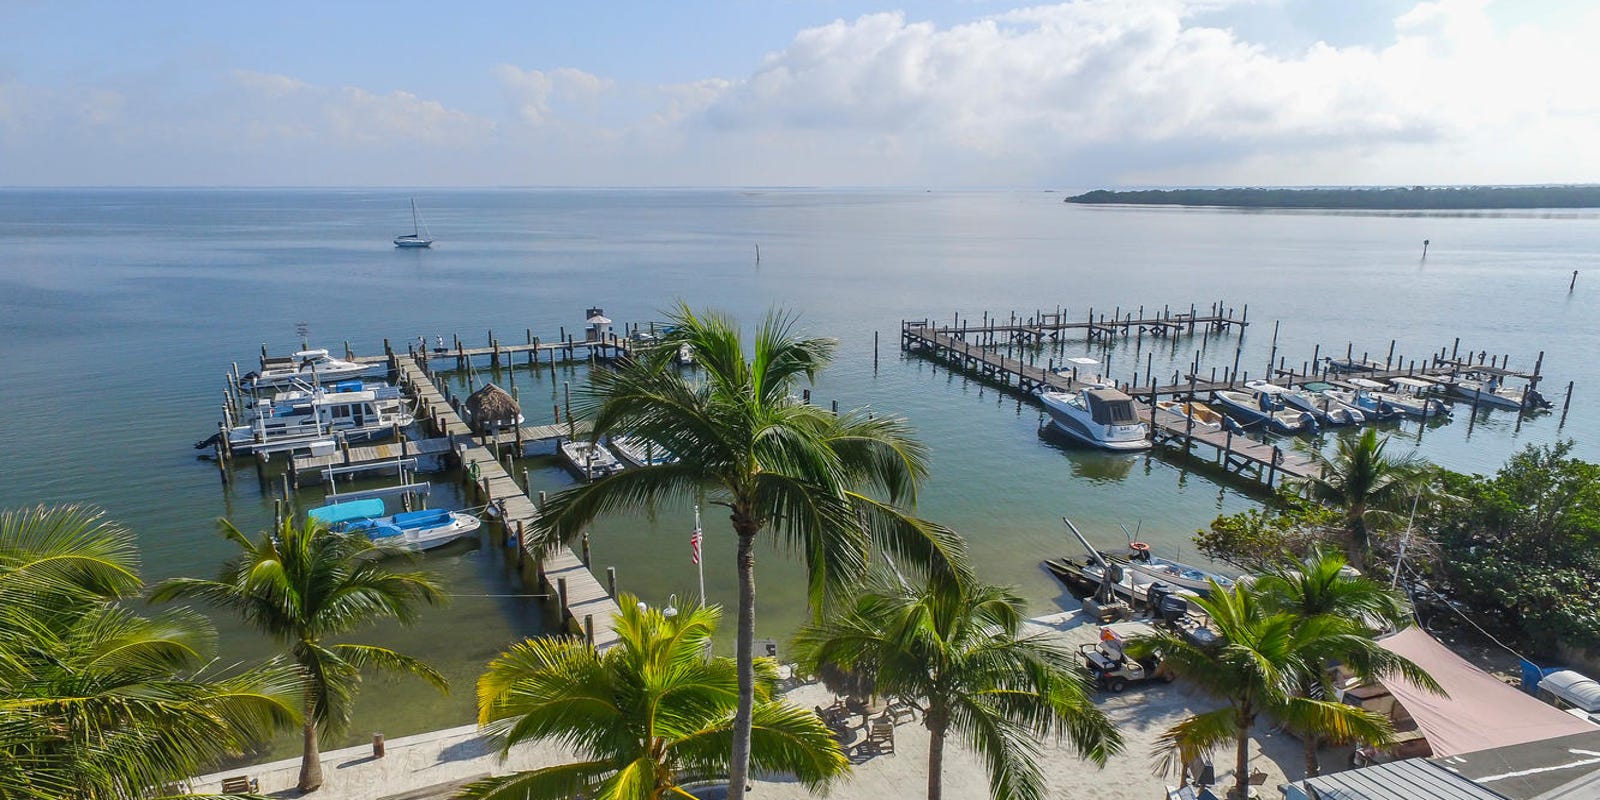 Jensen S Twin Palm Cottages Marina Resort On Captiva Up For Sale